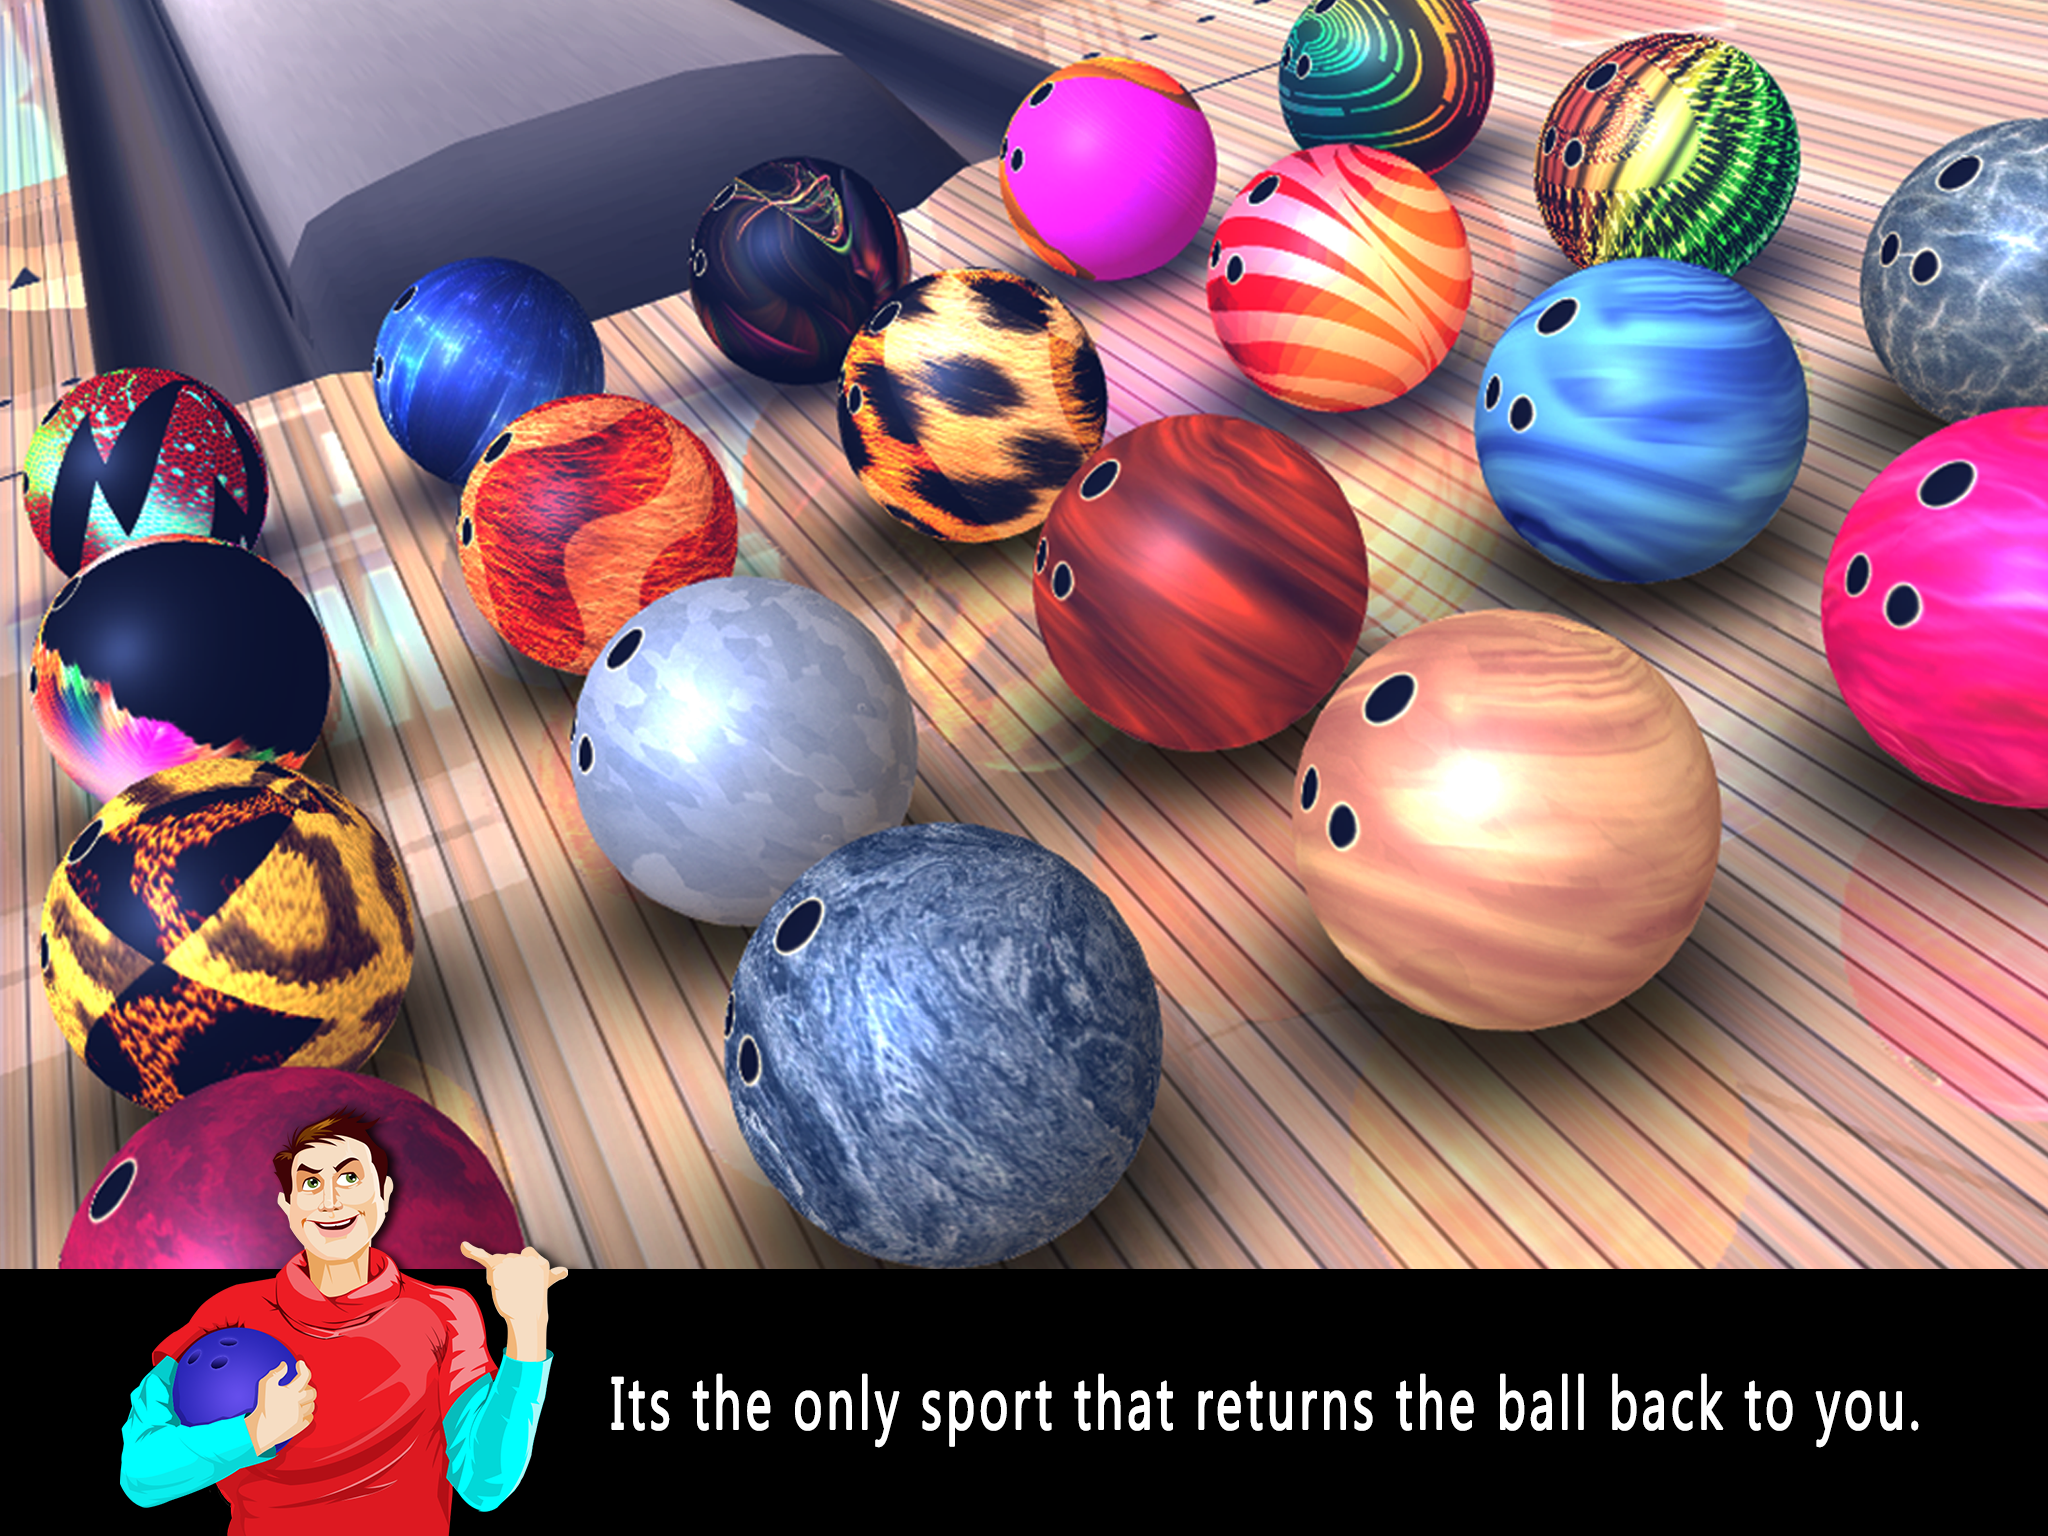 Screenshot of Bowling Nation 3D